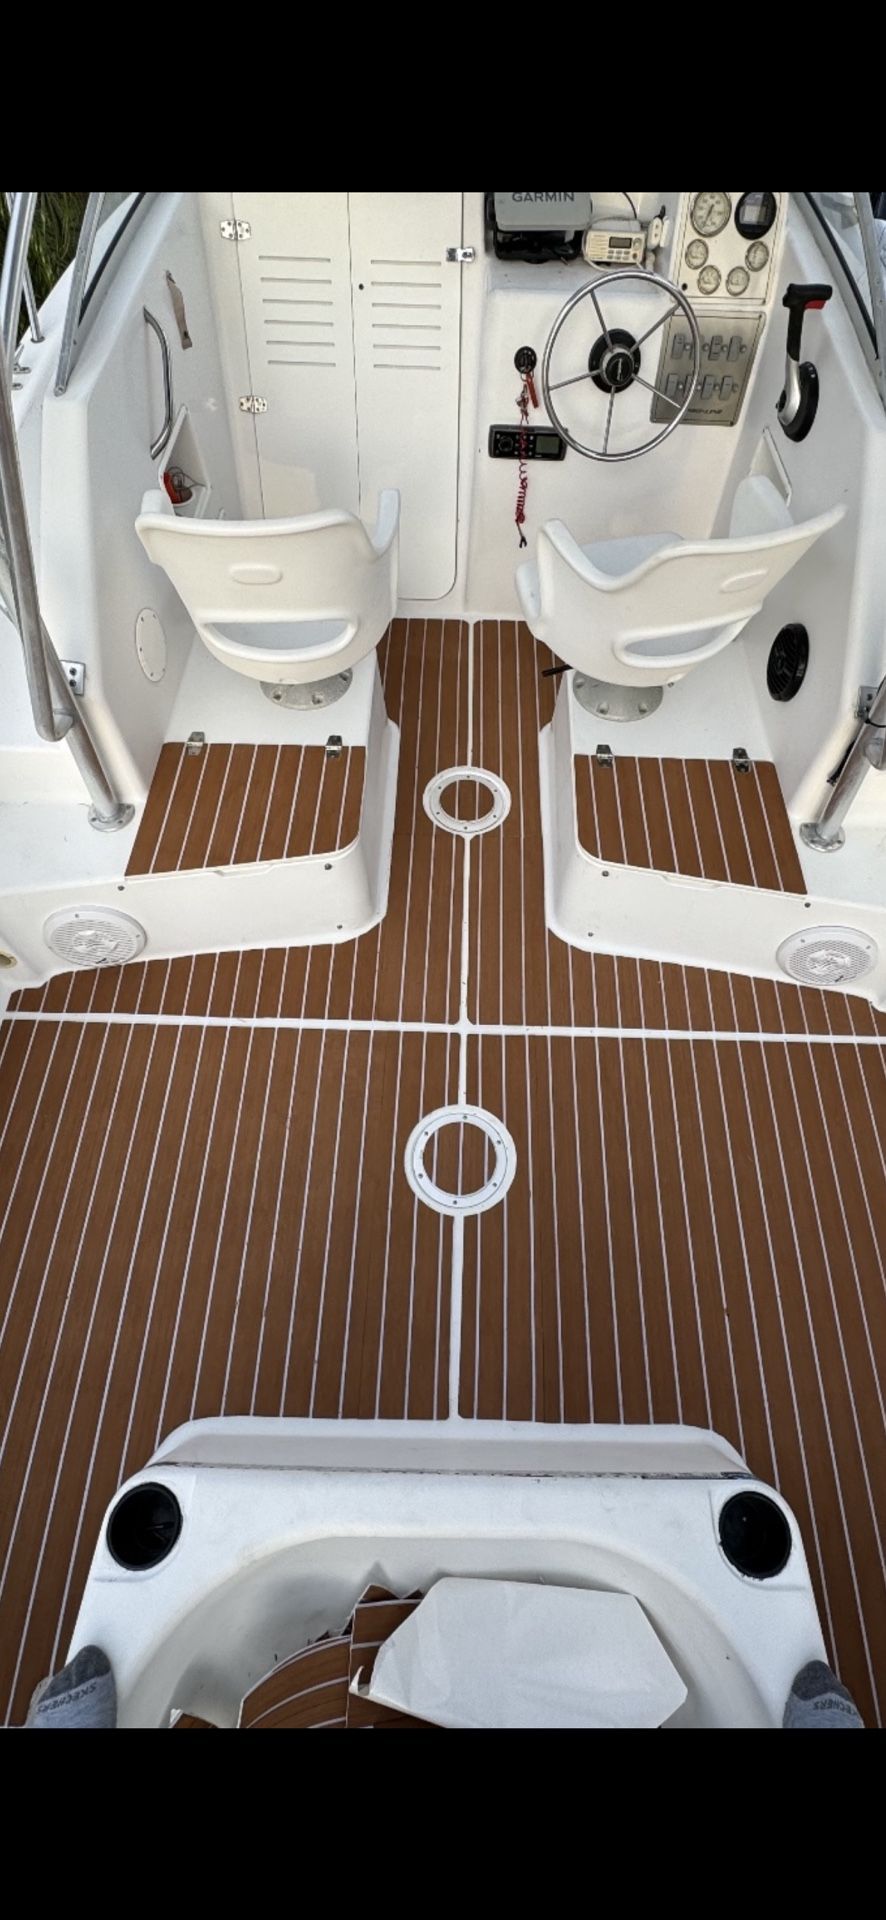 Láminas Para Pisos De Botes Con Pegamento 3M 🛟🛟🛟🛟🛟🛟🛟🛟🛟 Floors For Boats With 3M Glue